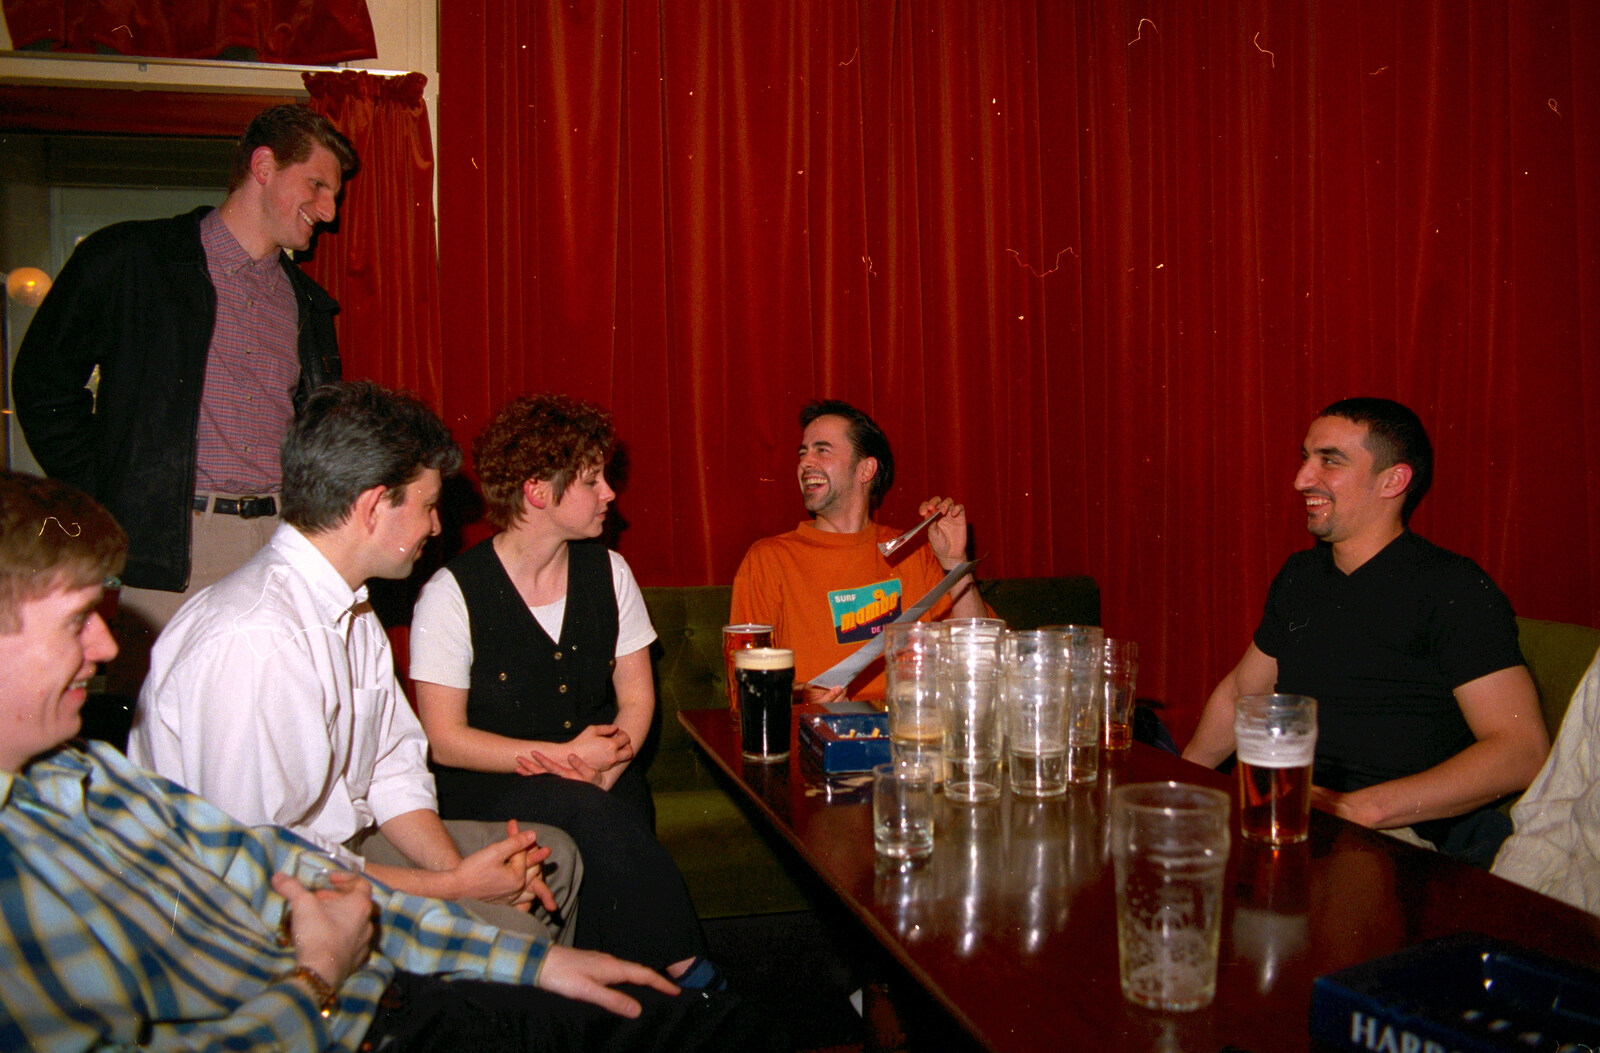 CISU Plays Cardinal's Hat in the SCC Social Club, Ipswich, Suffolk - 3rd August 1997: Jon 'Geezer' comes in 